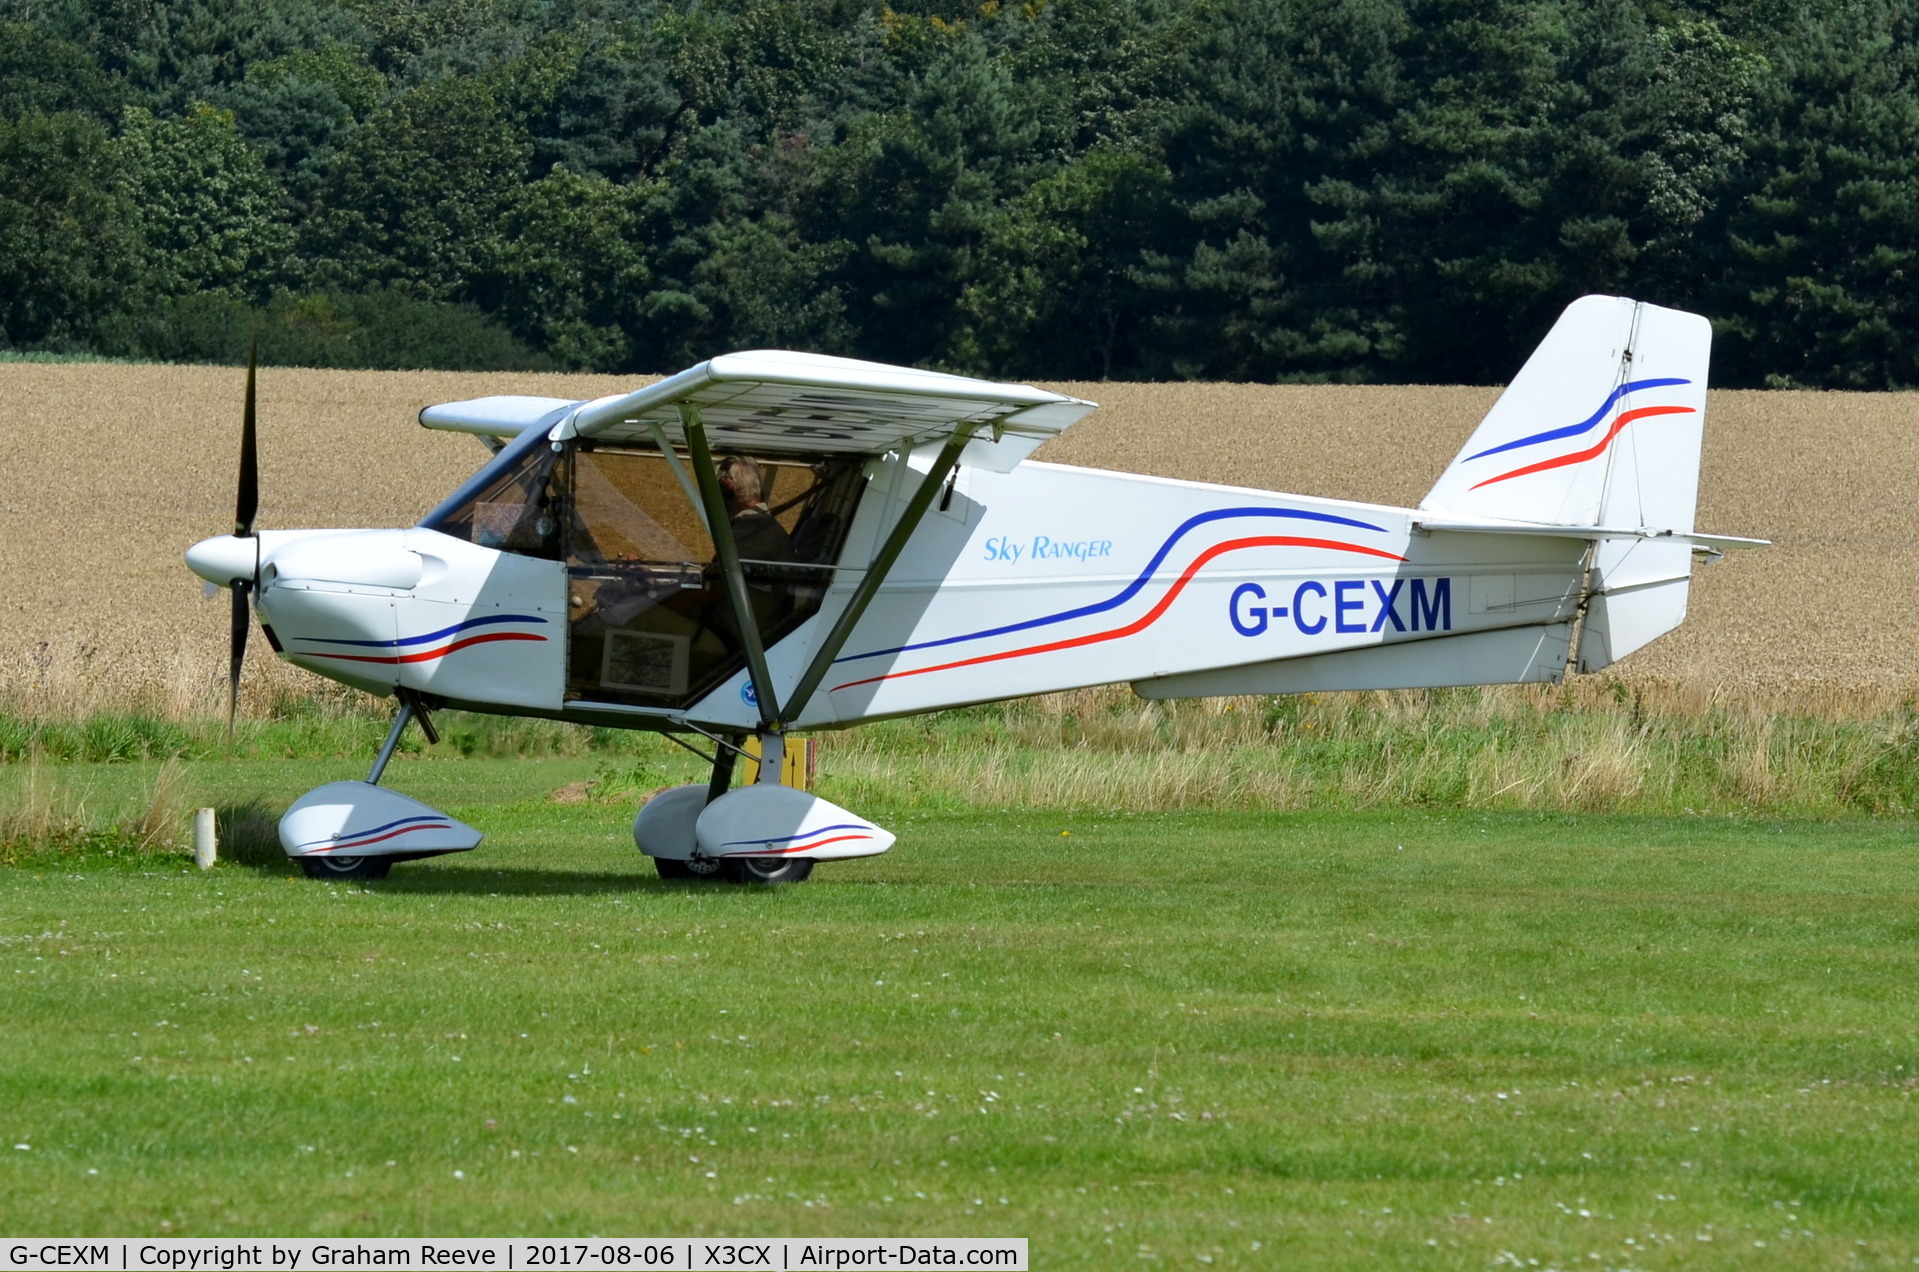 G-CEXM, 2007 Skyranger Swift 912S(1) C/N BMAA/HB/556, Just landed at Northrepps.